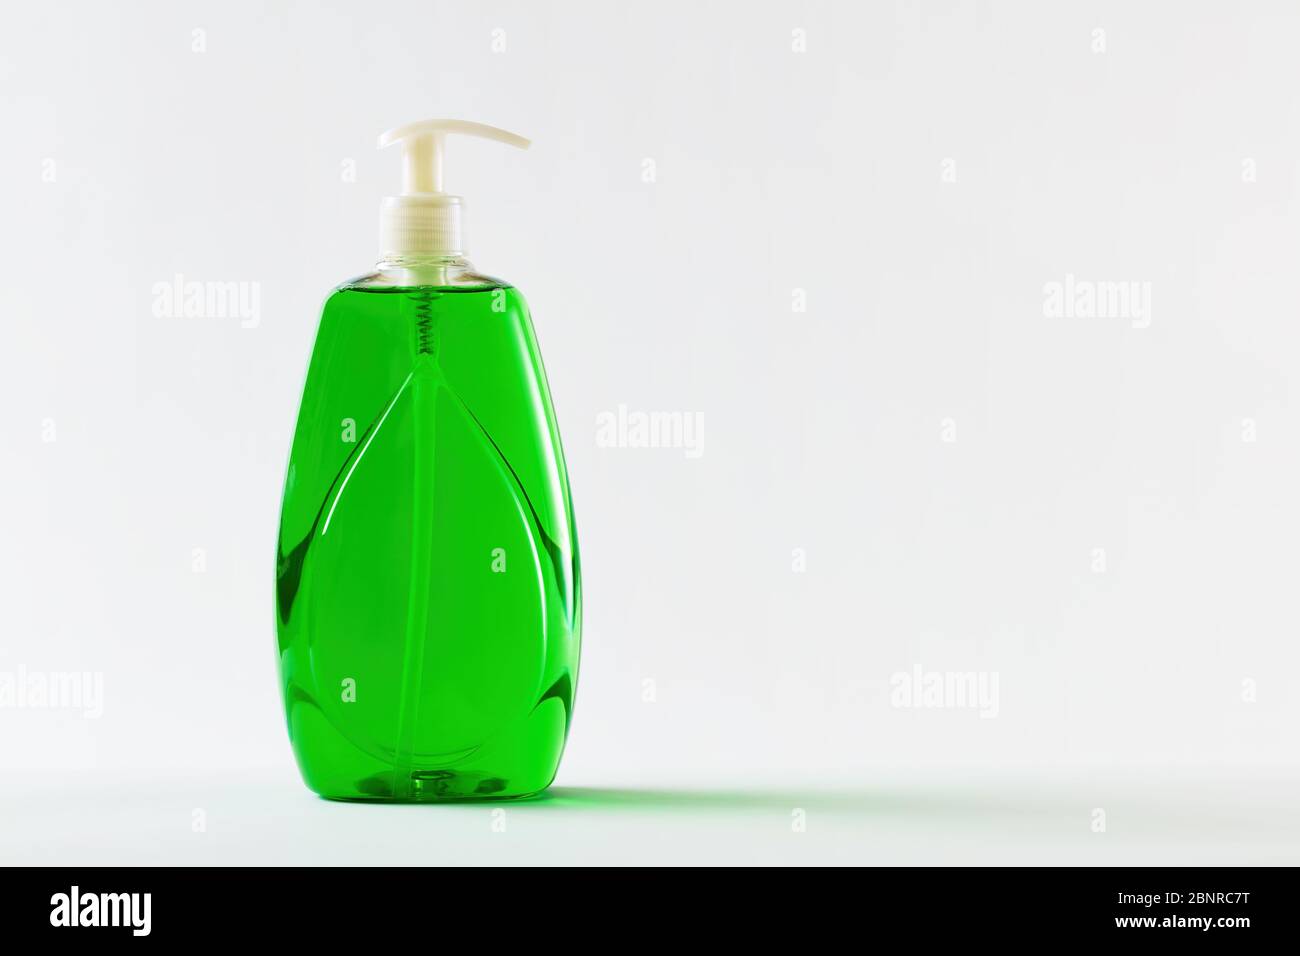 Green liquid soap in plastic bottle for hand sanitation on white background  Stock Photo - Alamy